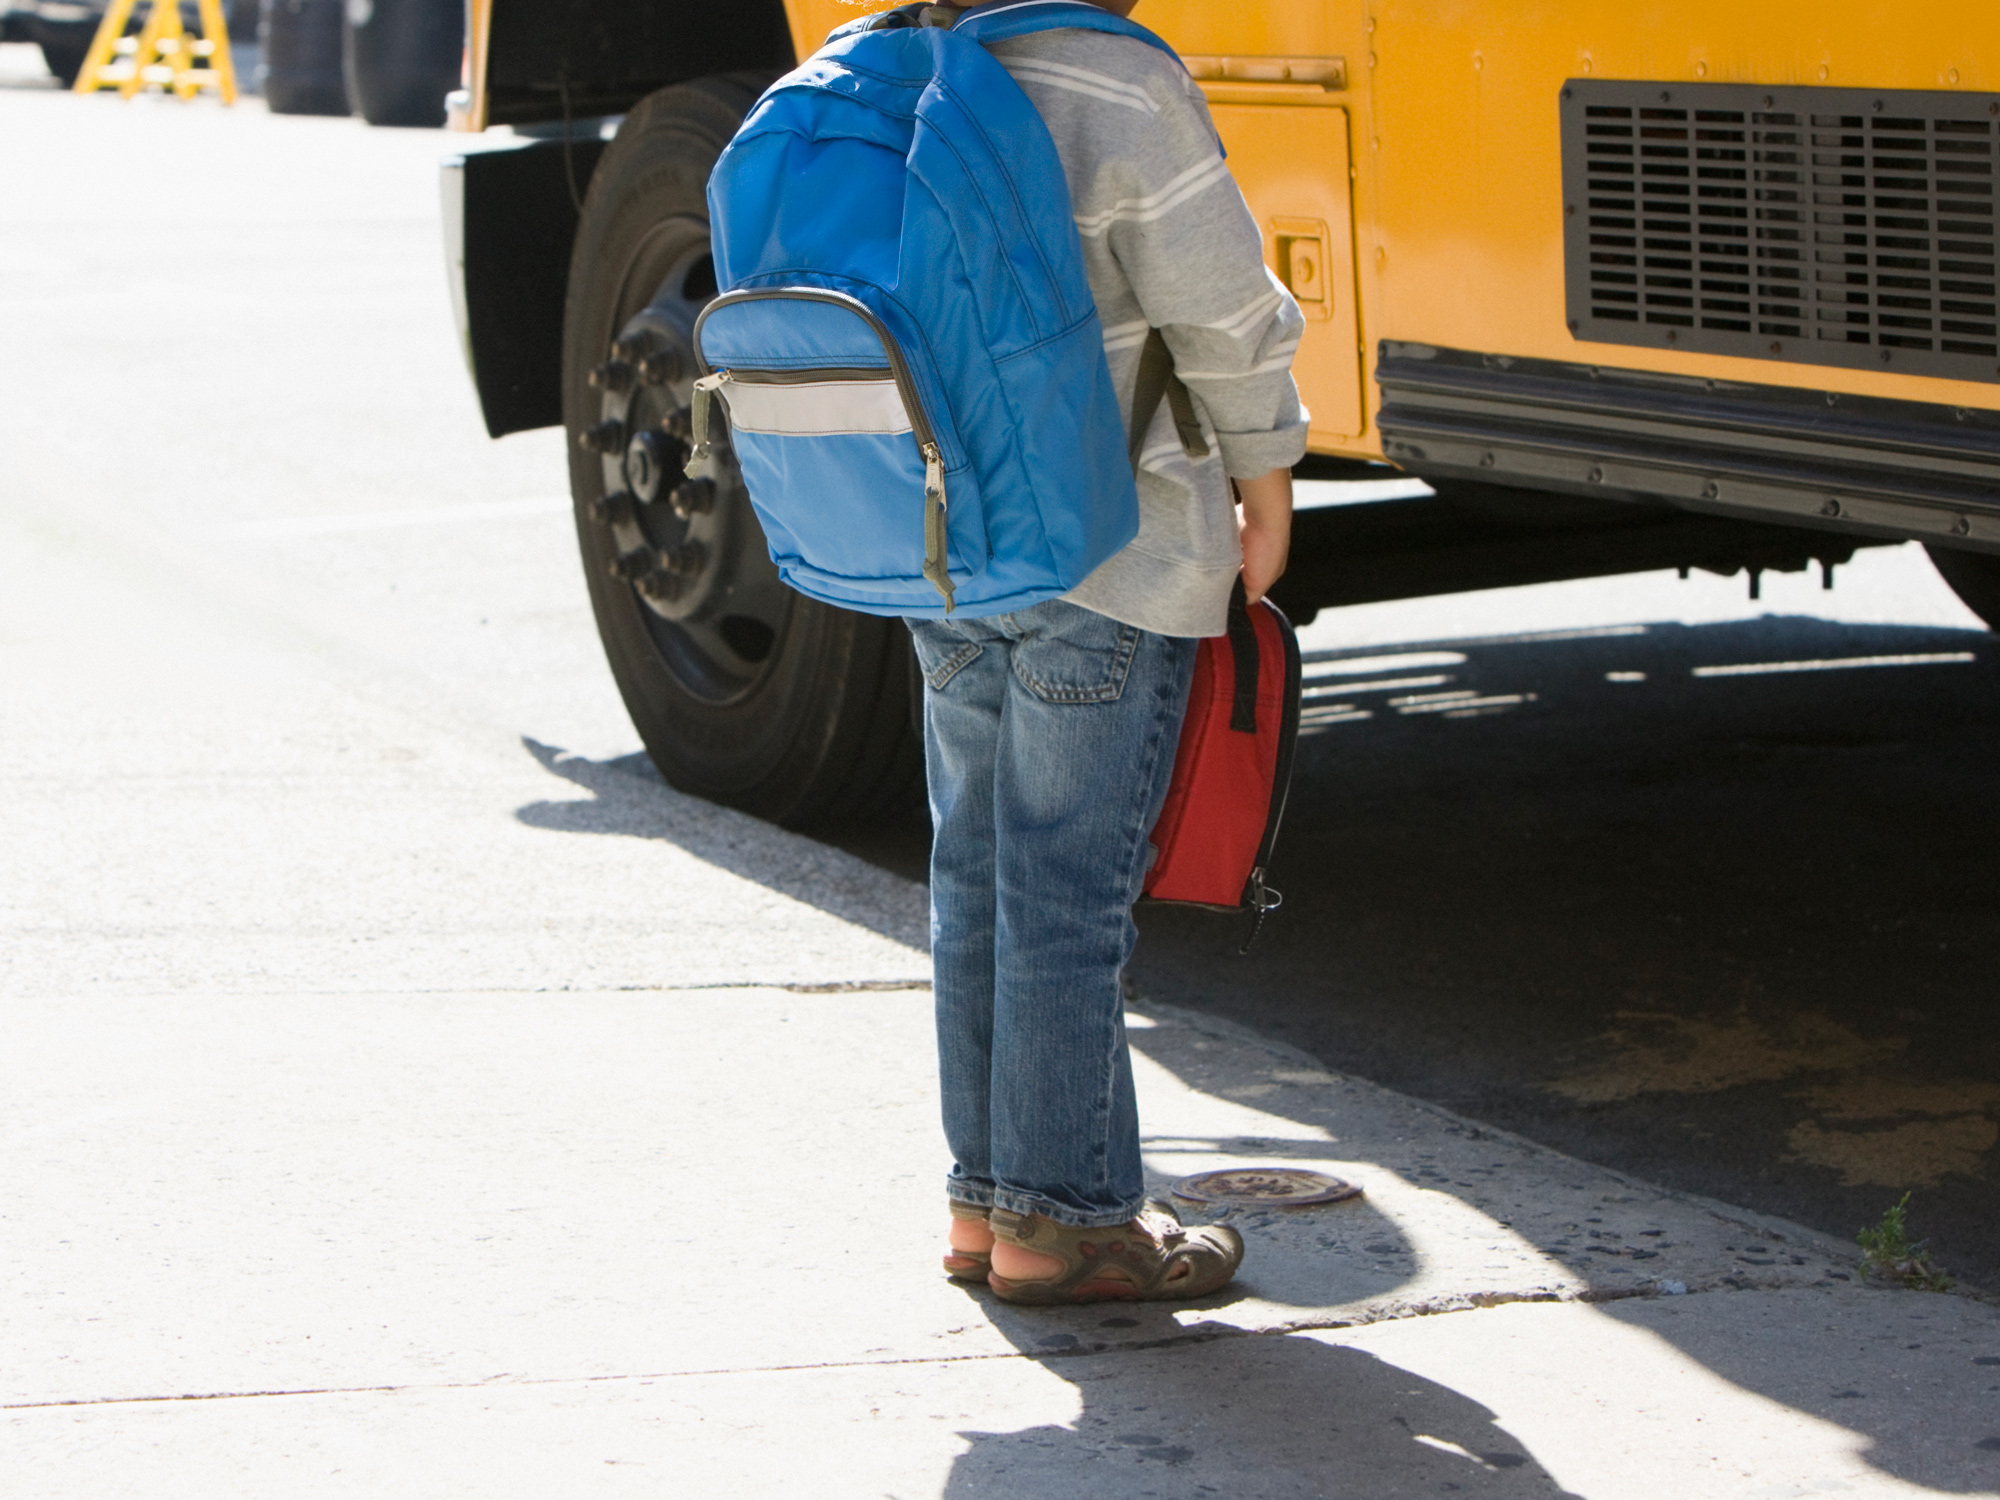 Mixed race boy standing near school bus